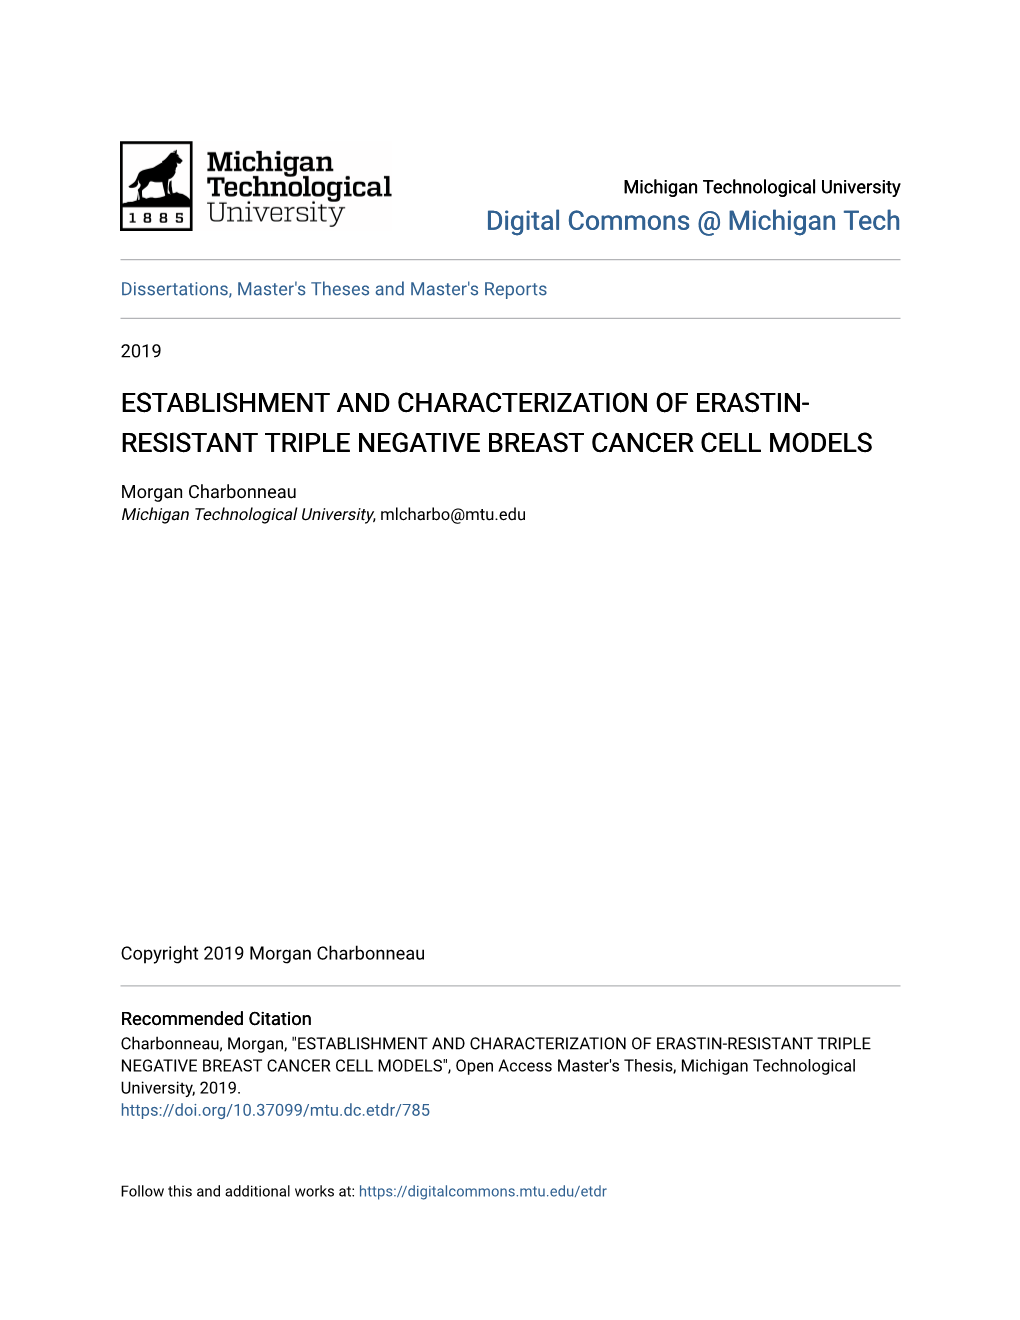 Establishment and Characterization of Erastin-Resistant Triple Negative